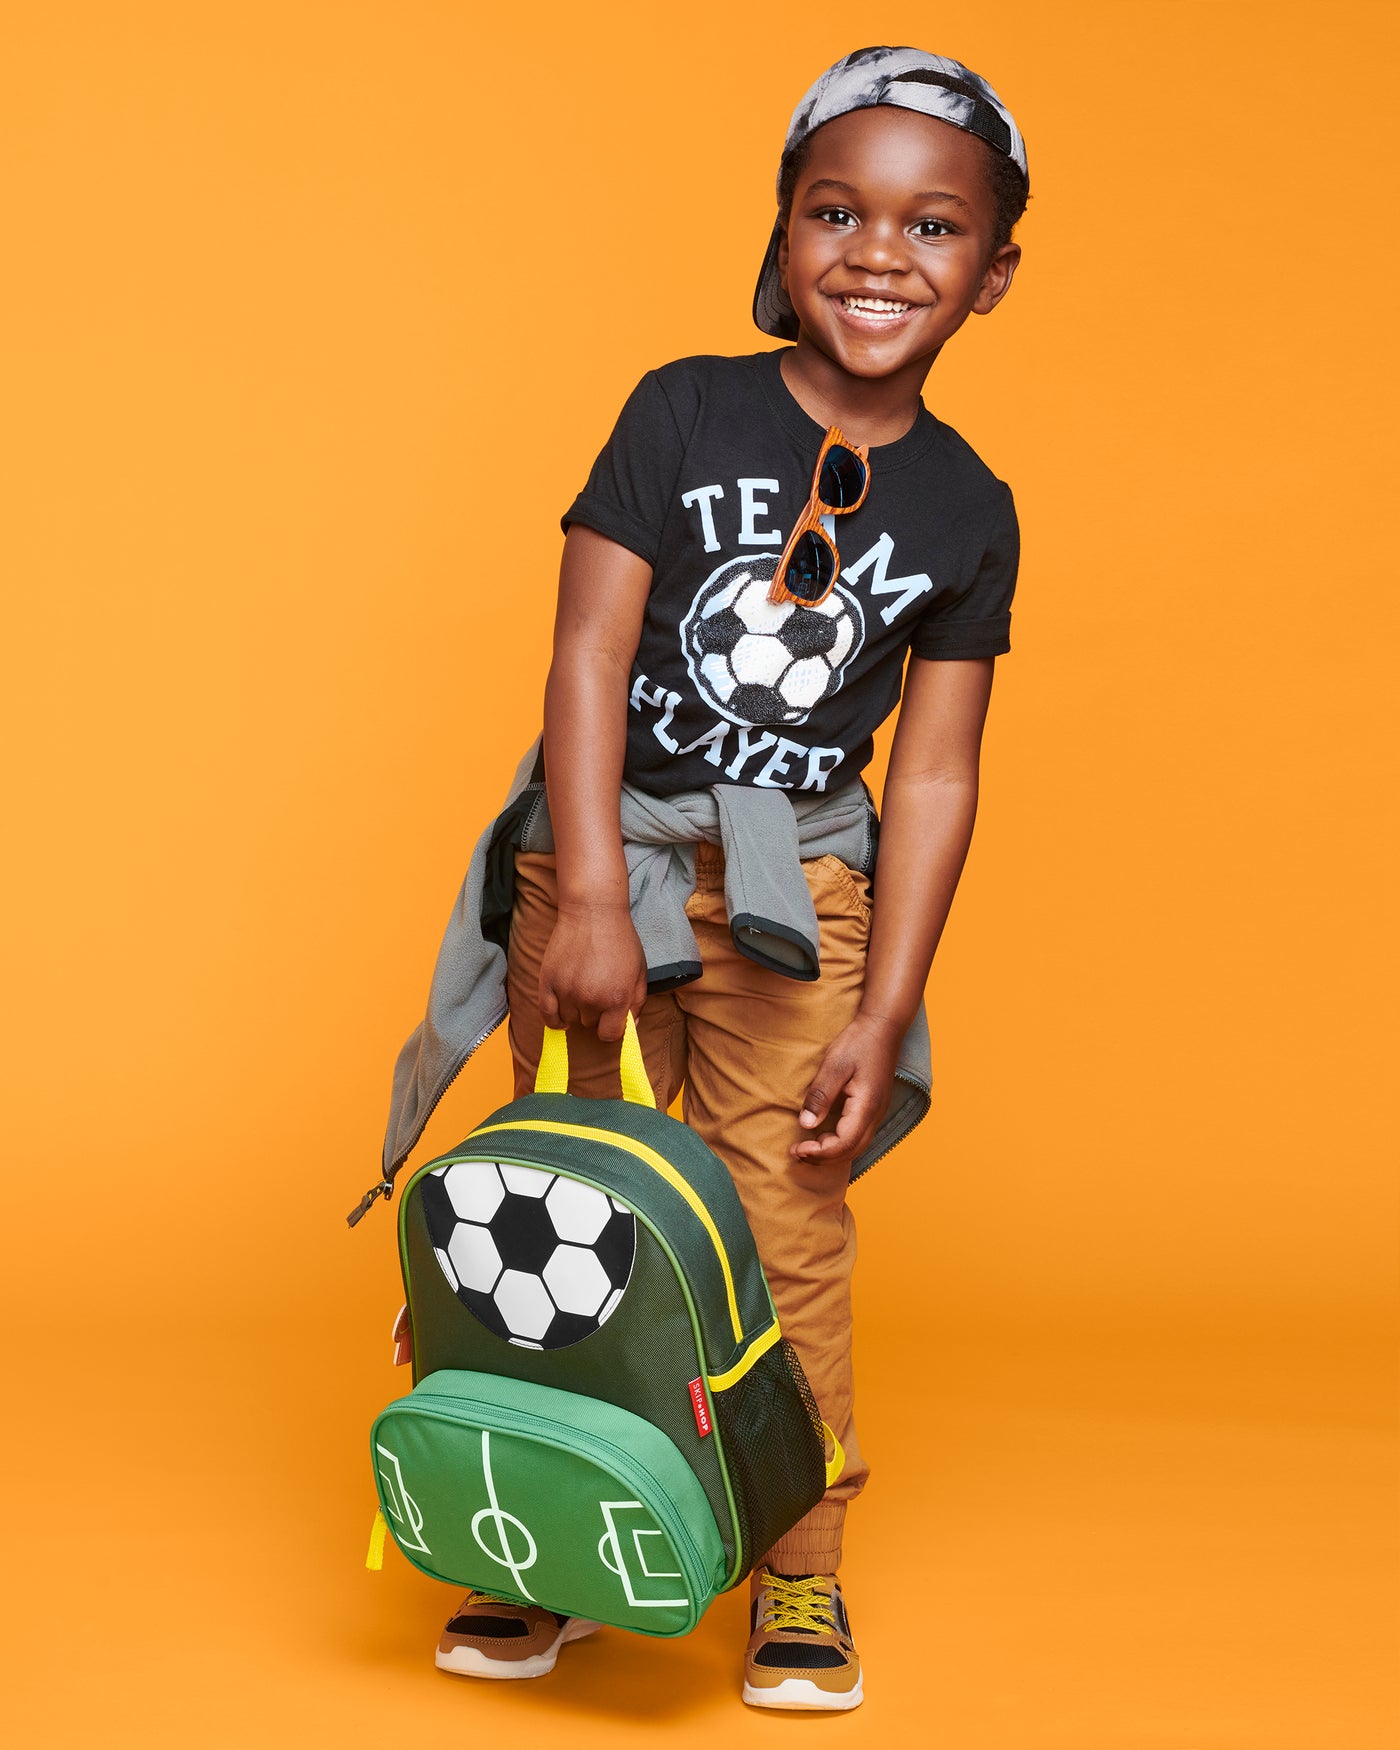 Skip Hop Spark Style Little Kid Backpack - Soccer